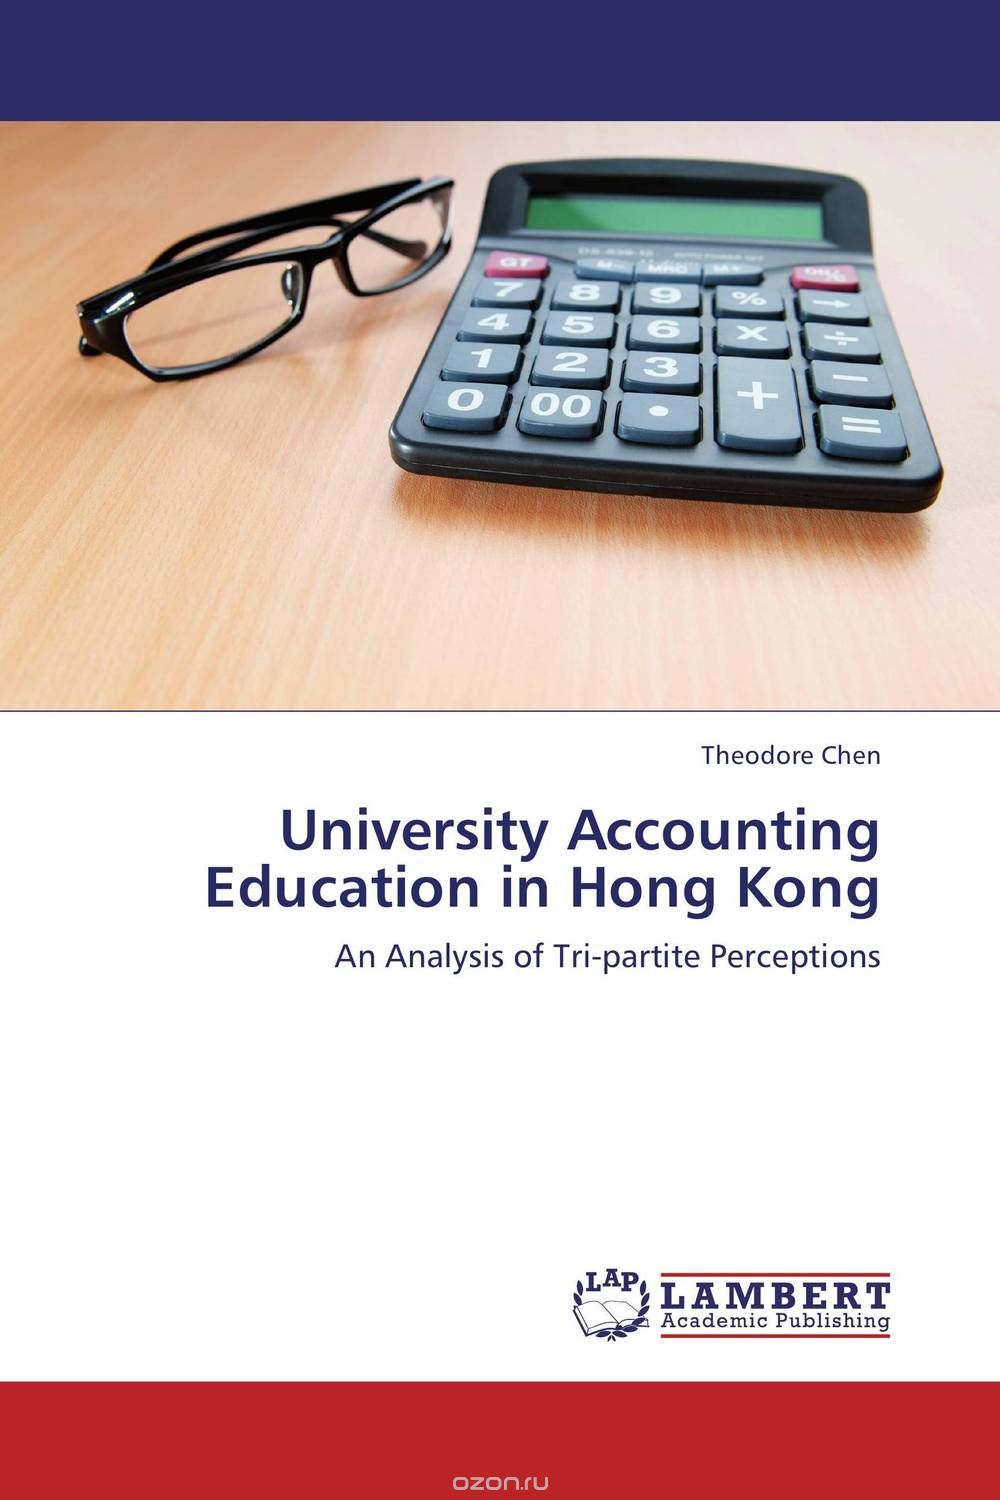 Скачать книгу "University Accounting Education in Hong Kong"